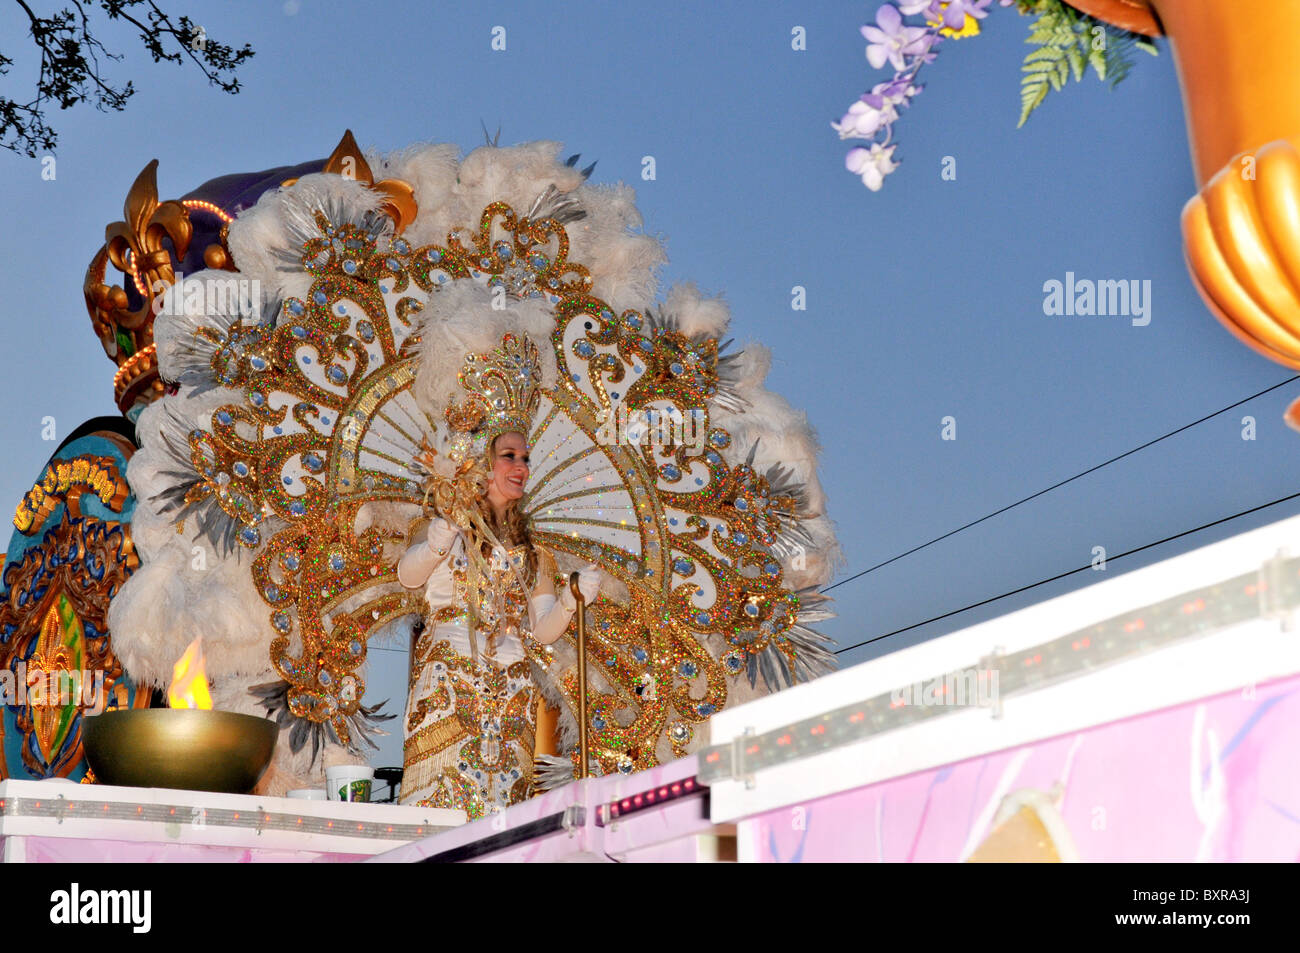 Wunderschön kostümiert Frau auf Float, Endymion Parade, Karneval, New Orleans, Louisiana Stockfoto